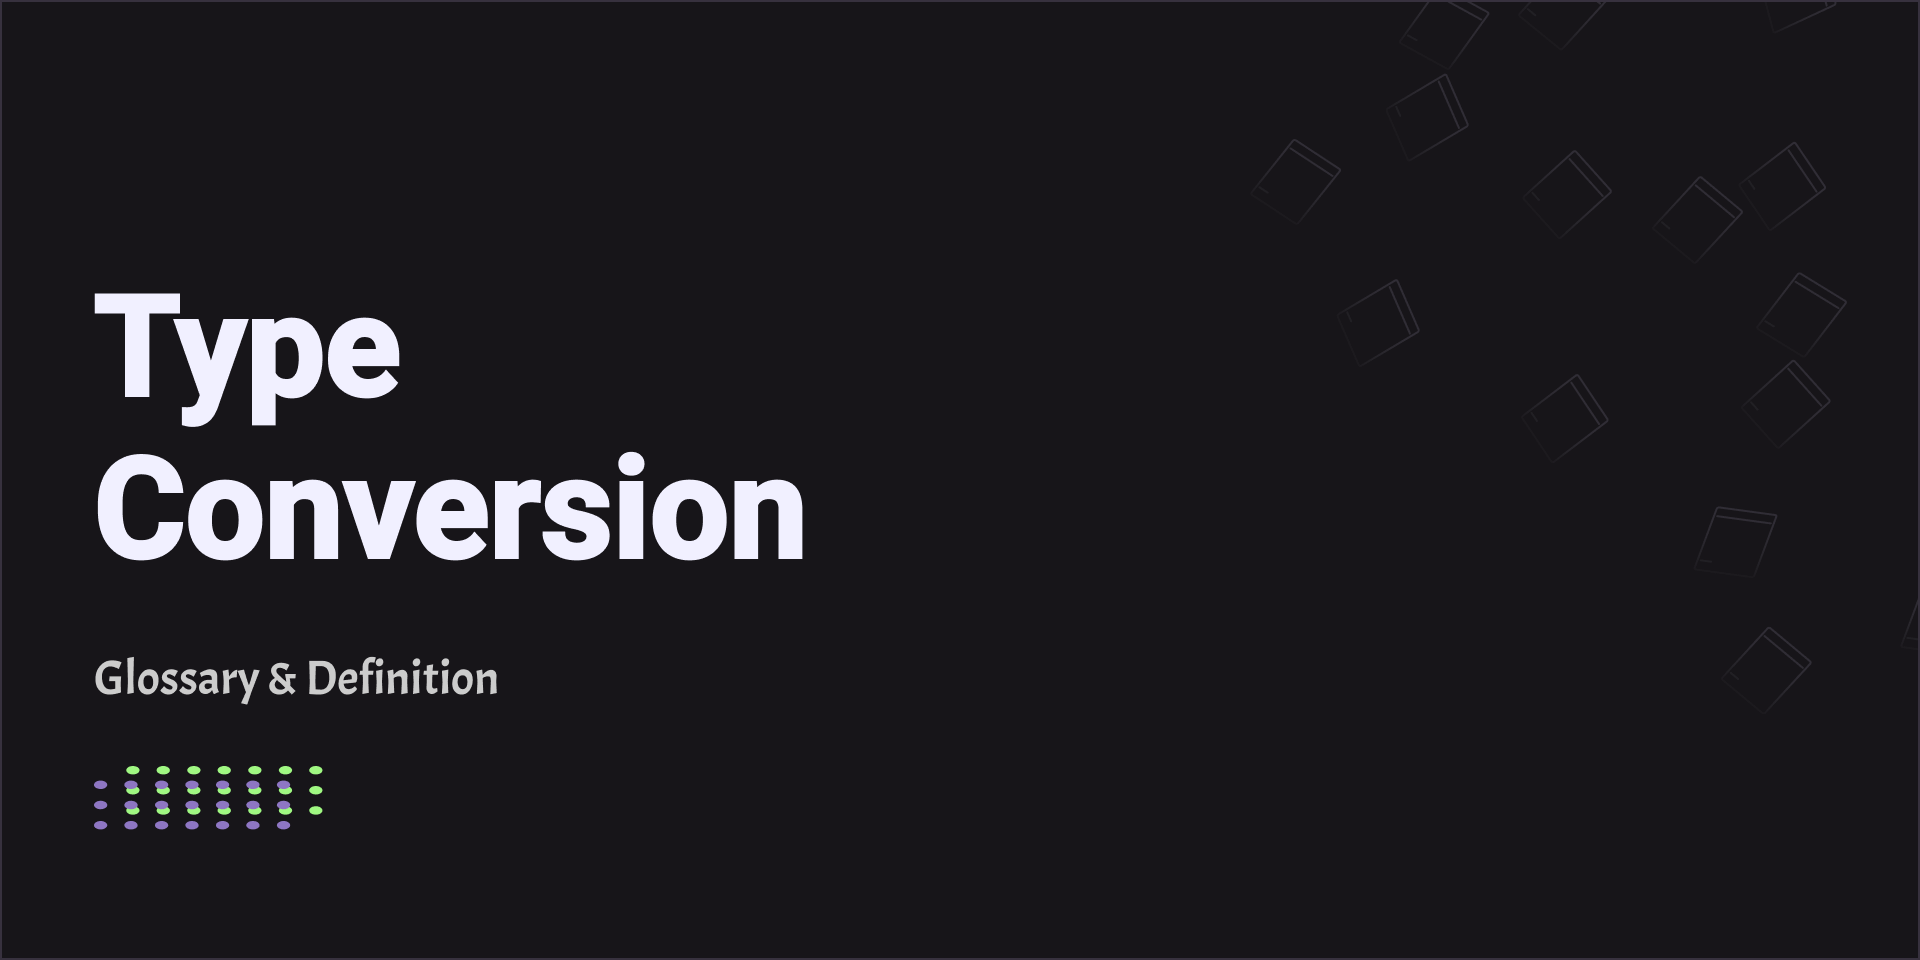 Type Conversion